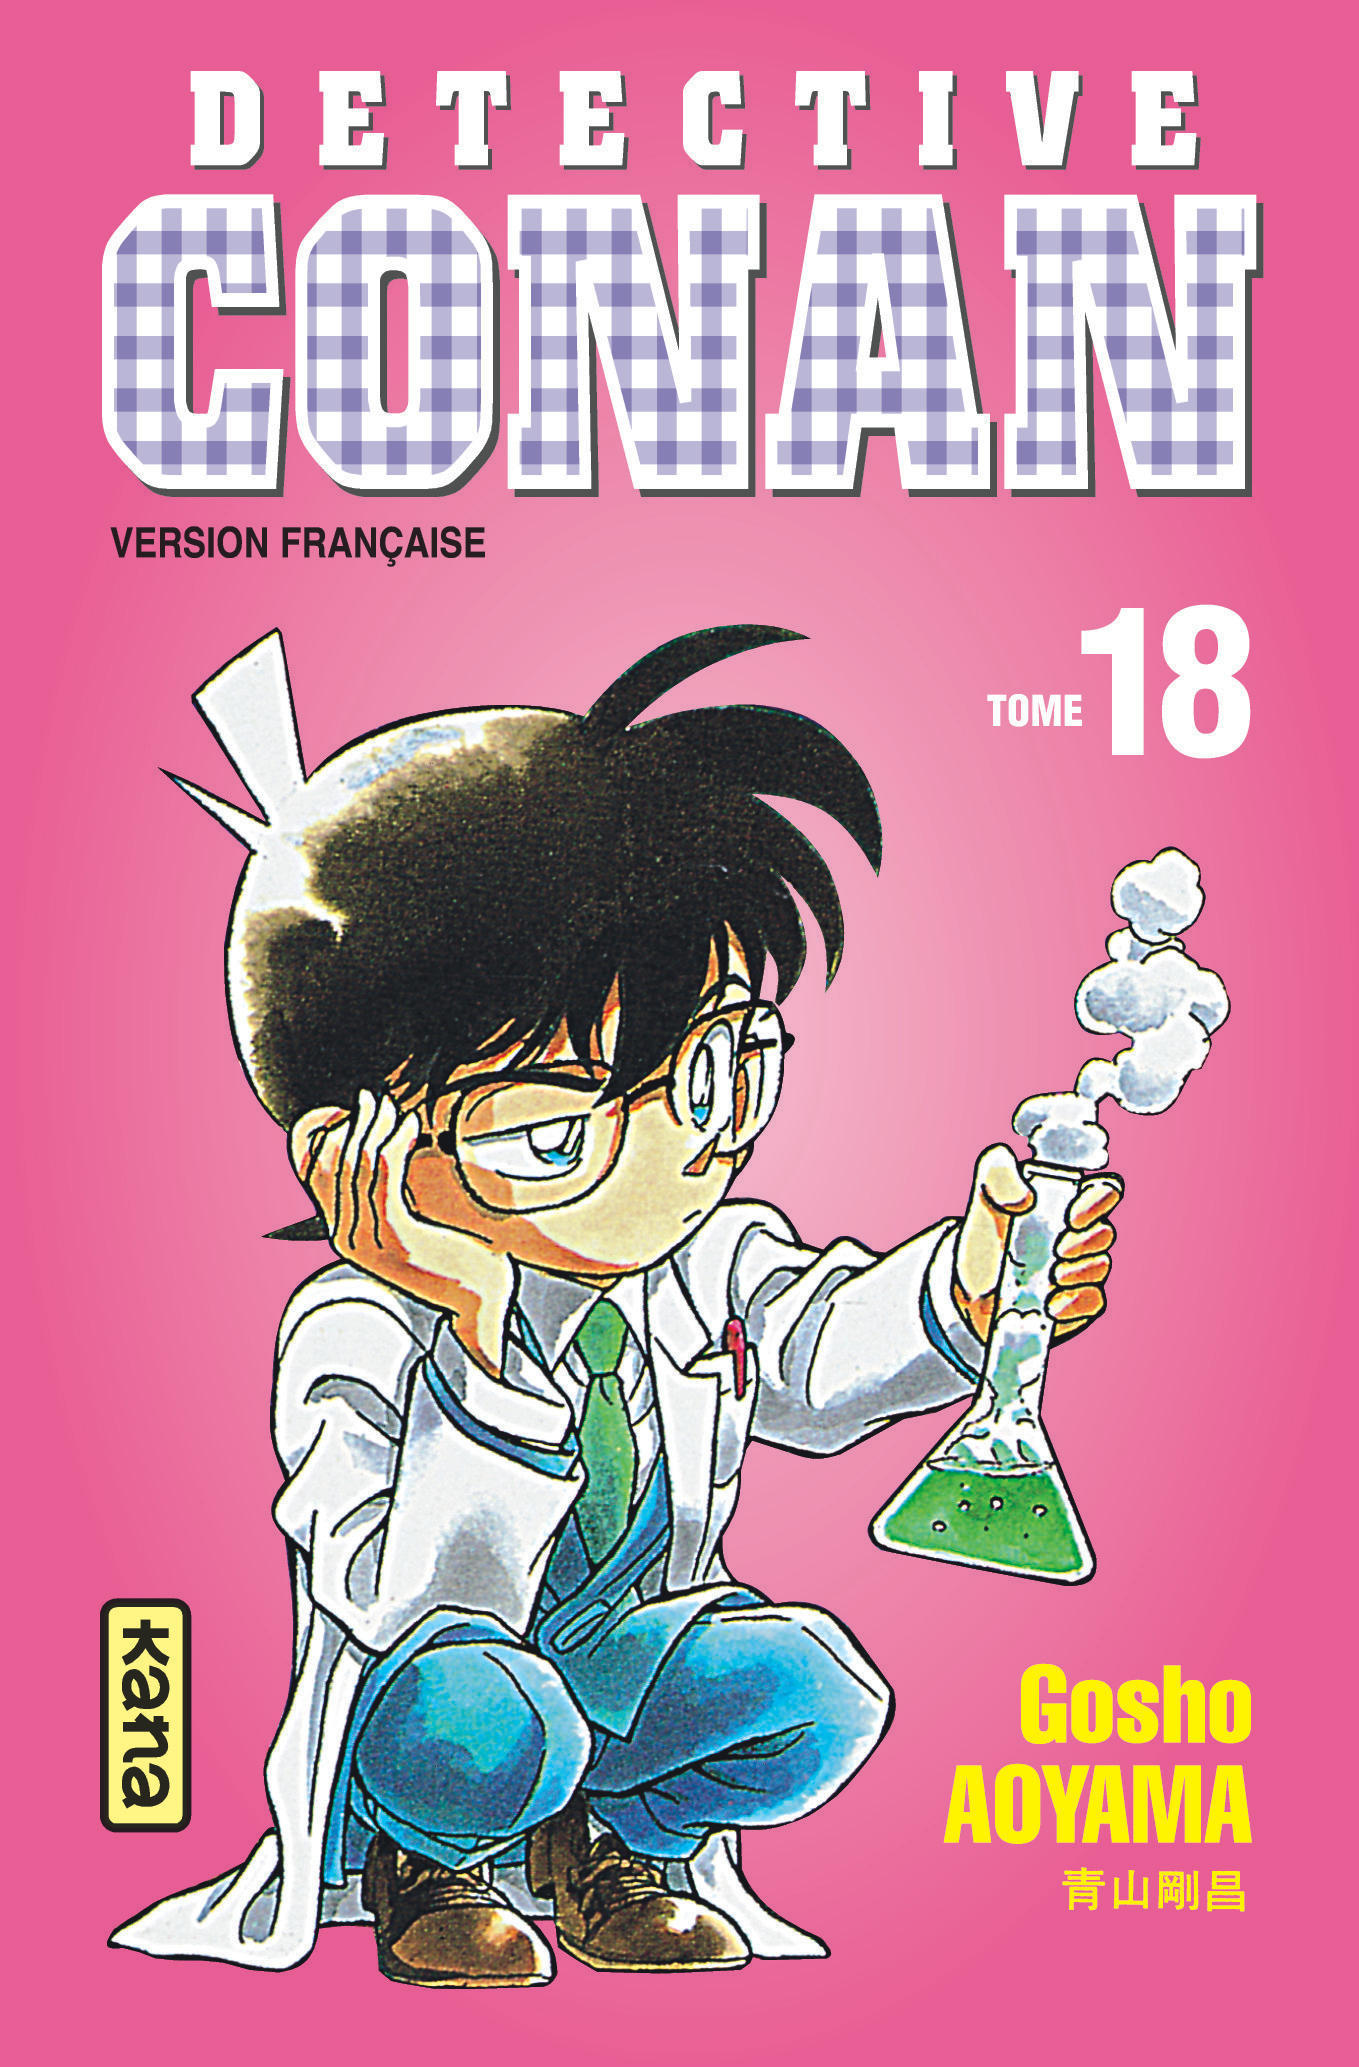 Détective Conan - Tome 18 (9782871292128-front-cover)